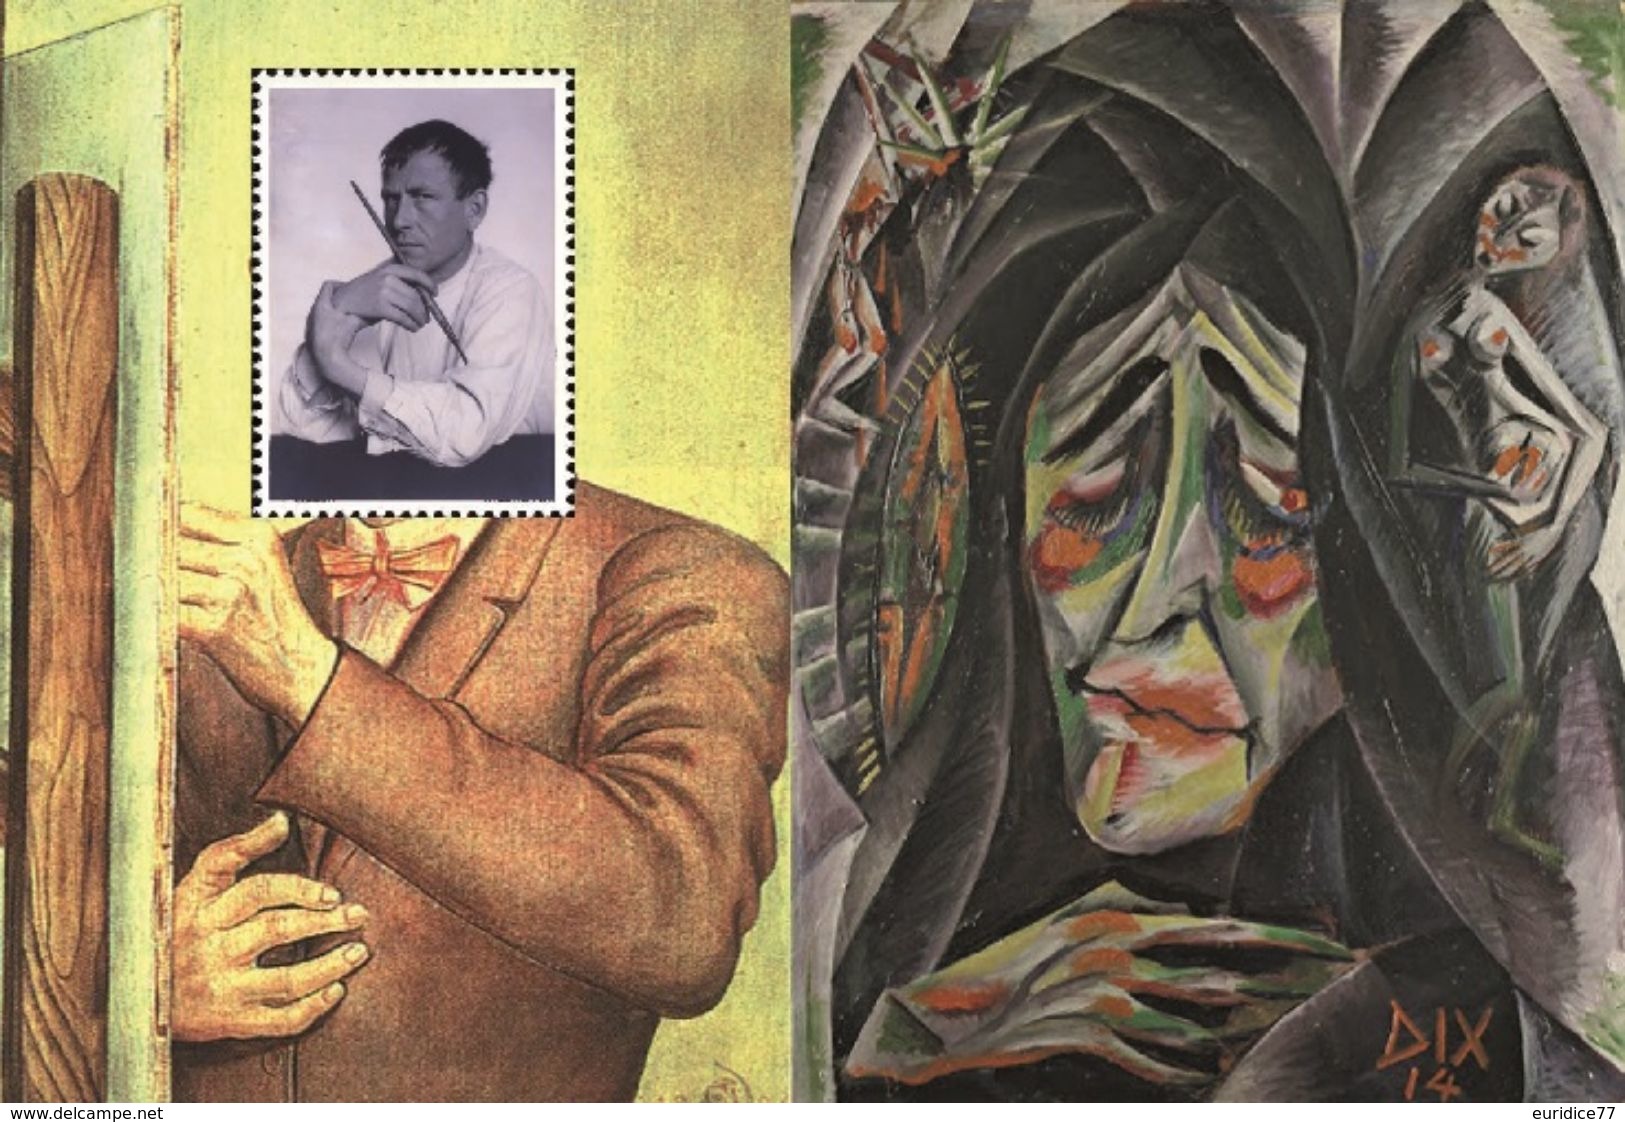 Otto Dix Postcard Collection - Size: 15x10 Cm. Aprox. - Filkasol Edition Year 2013 Mint - Pintura & Cuadros